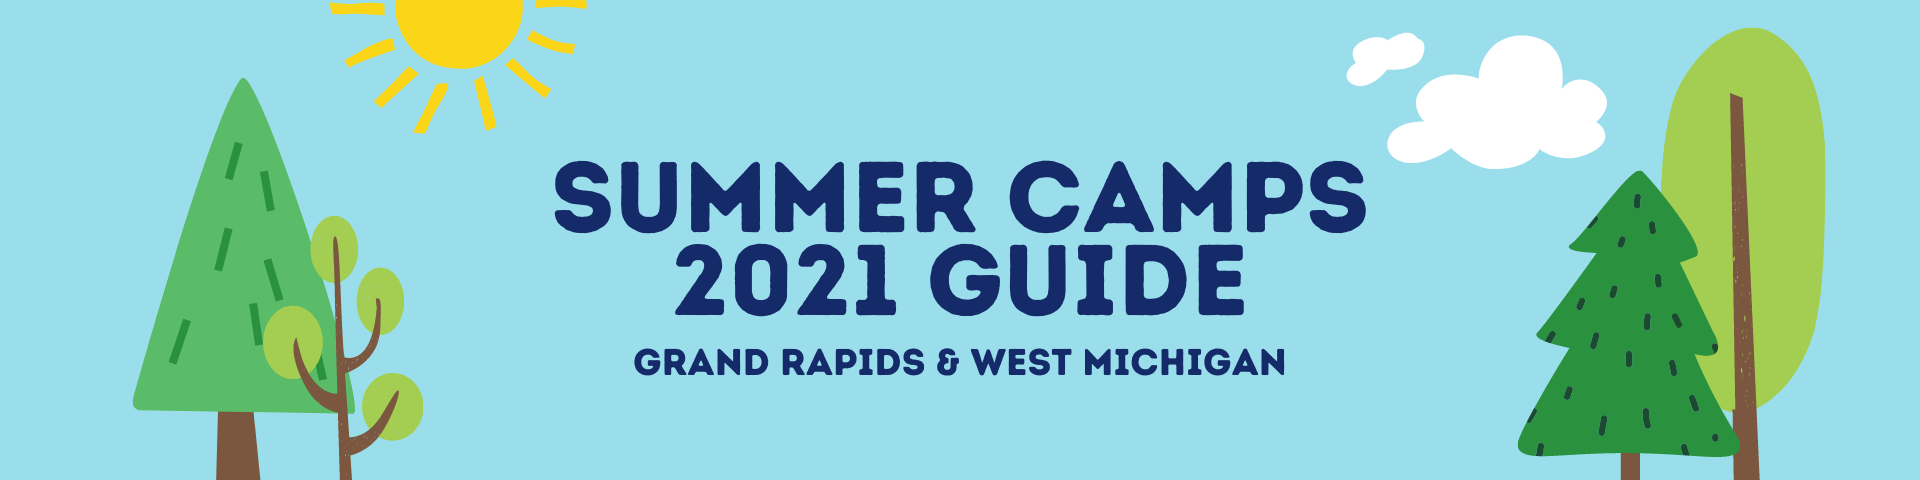 2021 Summer Camps Guide Header